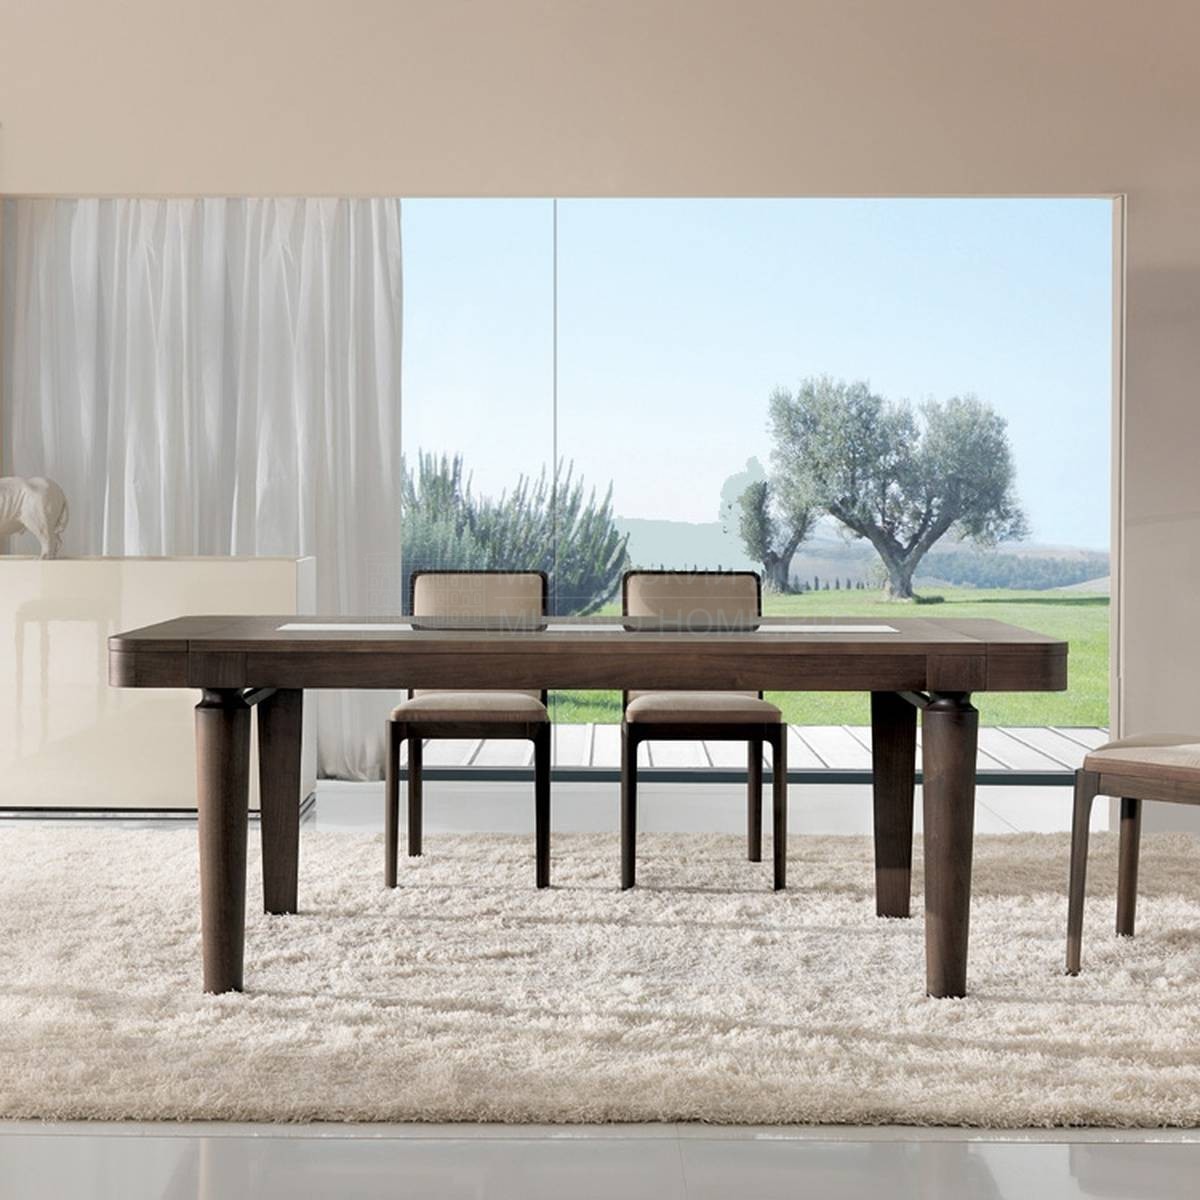 Обеденный стол Merlino/table из Италии фабрики BESANA